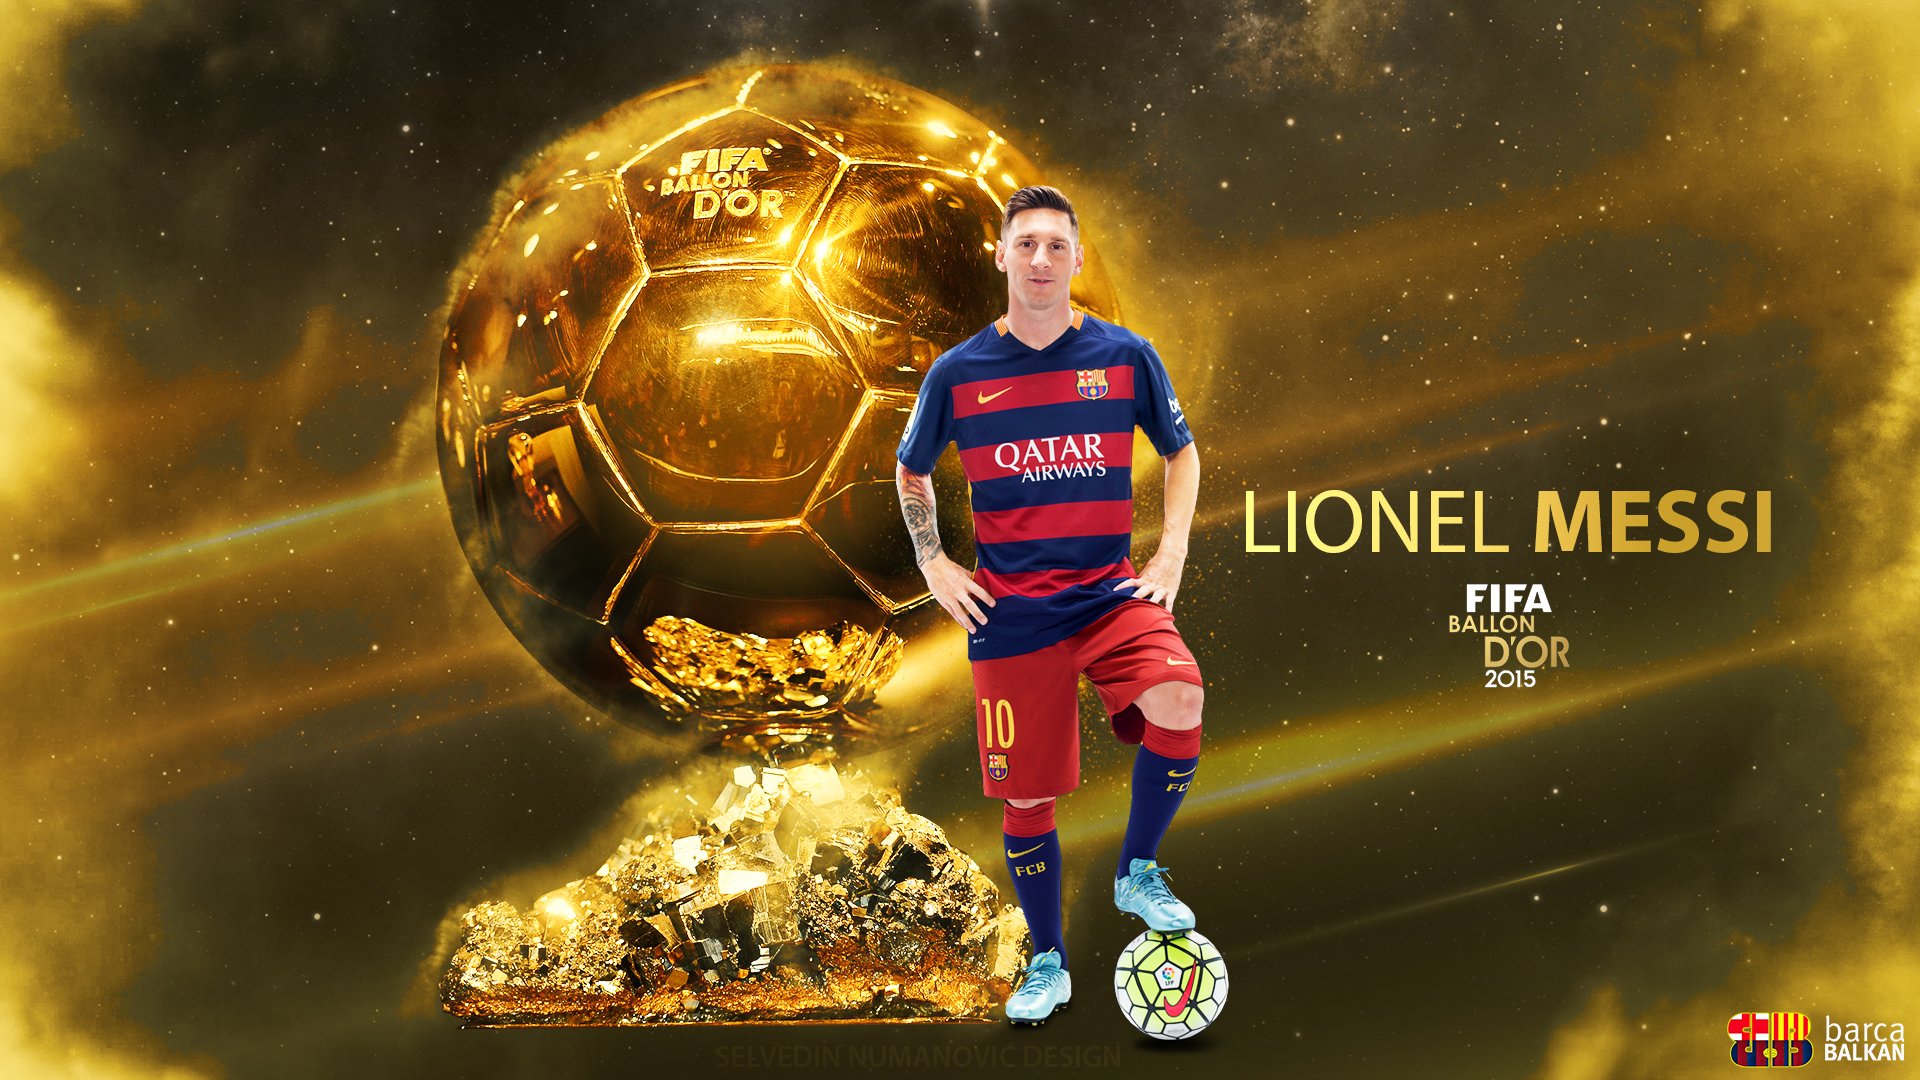 Lionel Messi FIFA Ballon dOr 2015 HD wallpaper by SelvedinFCB on